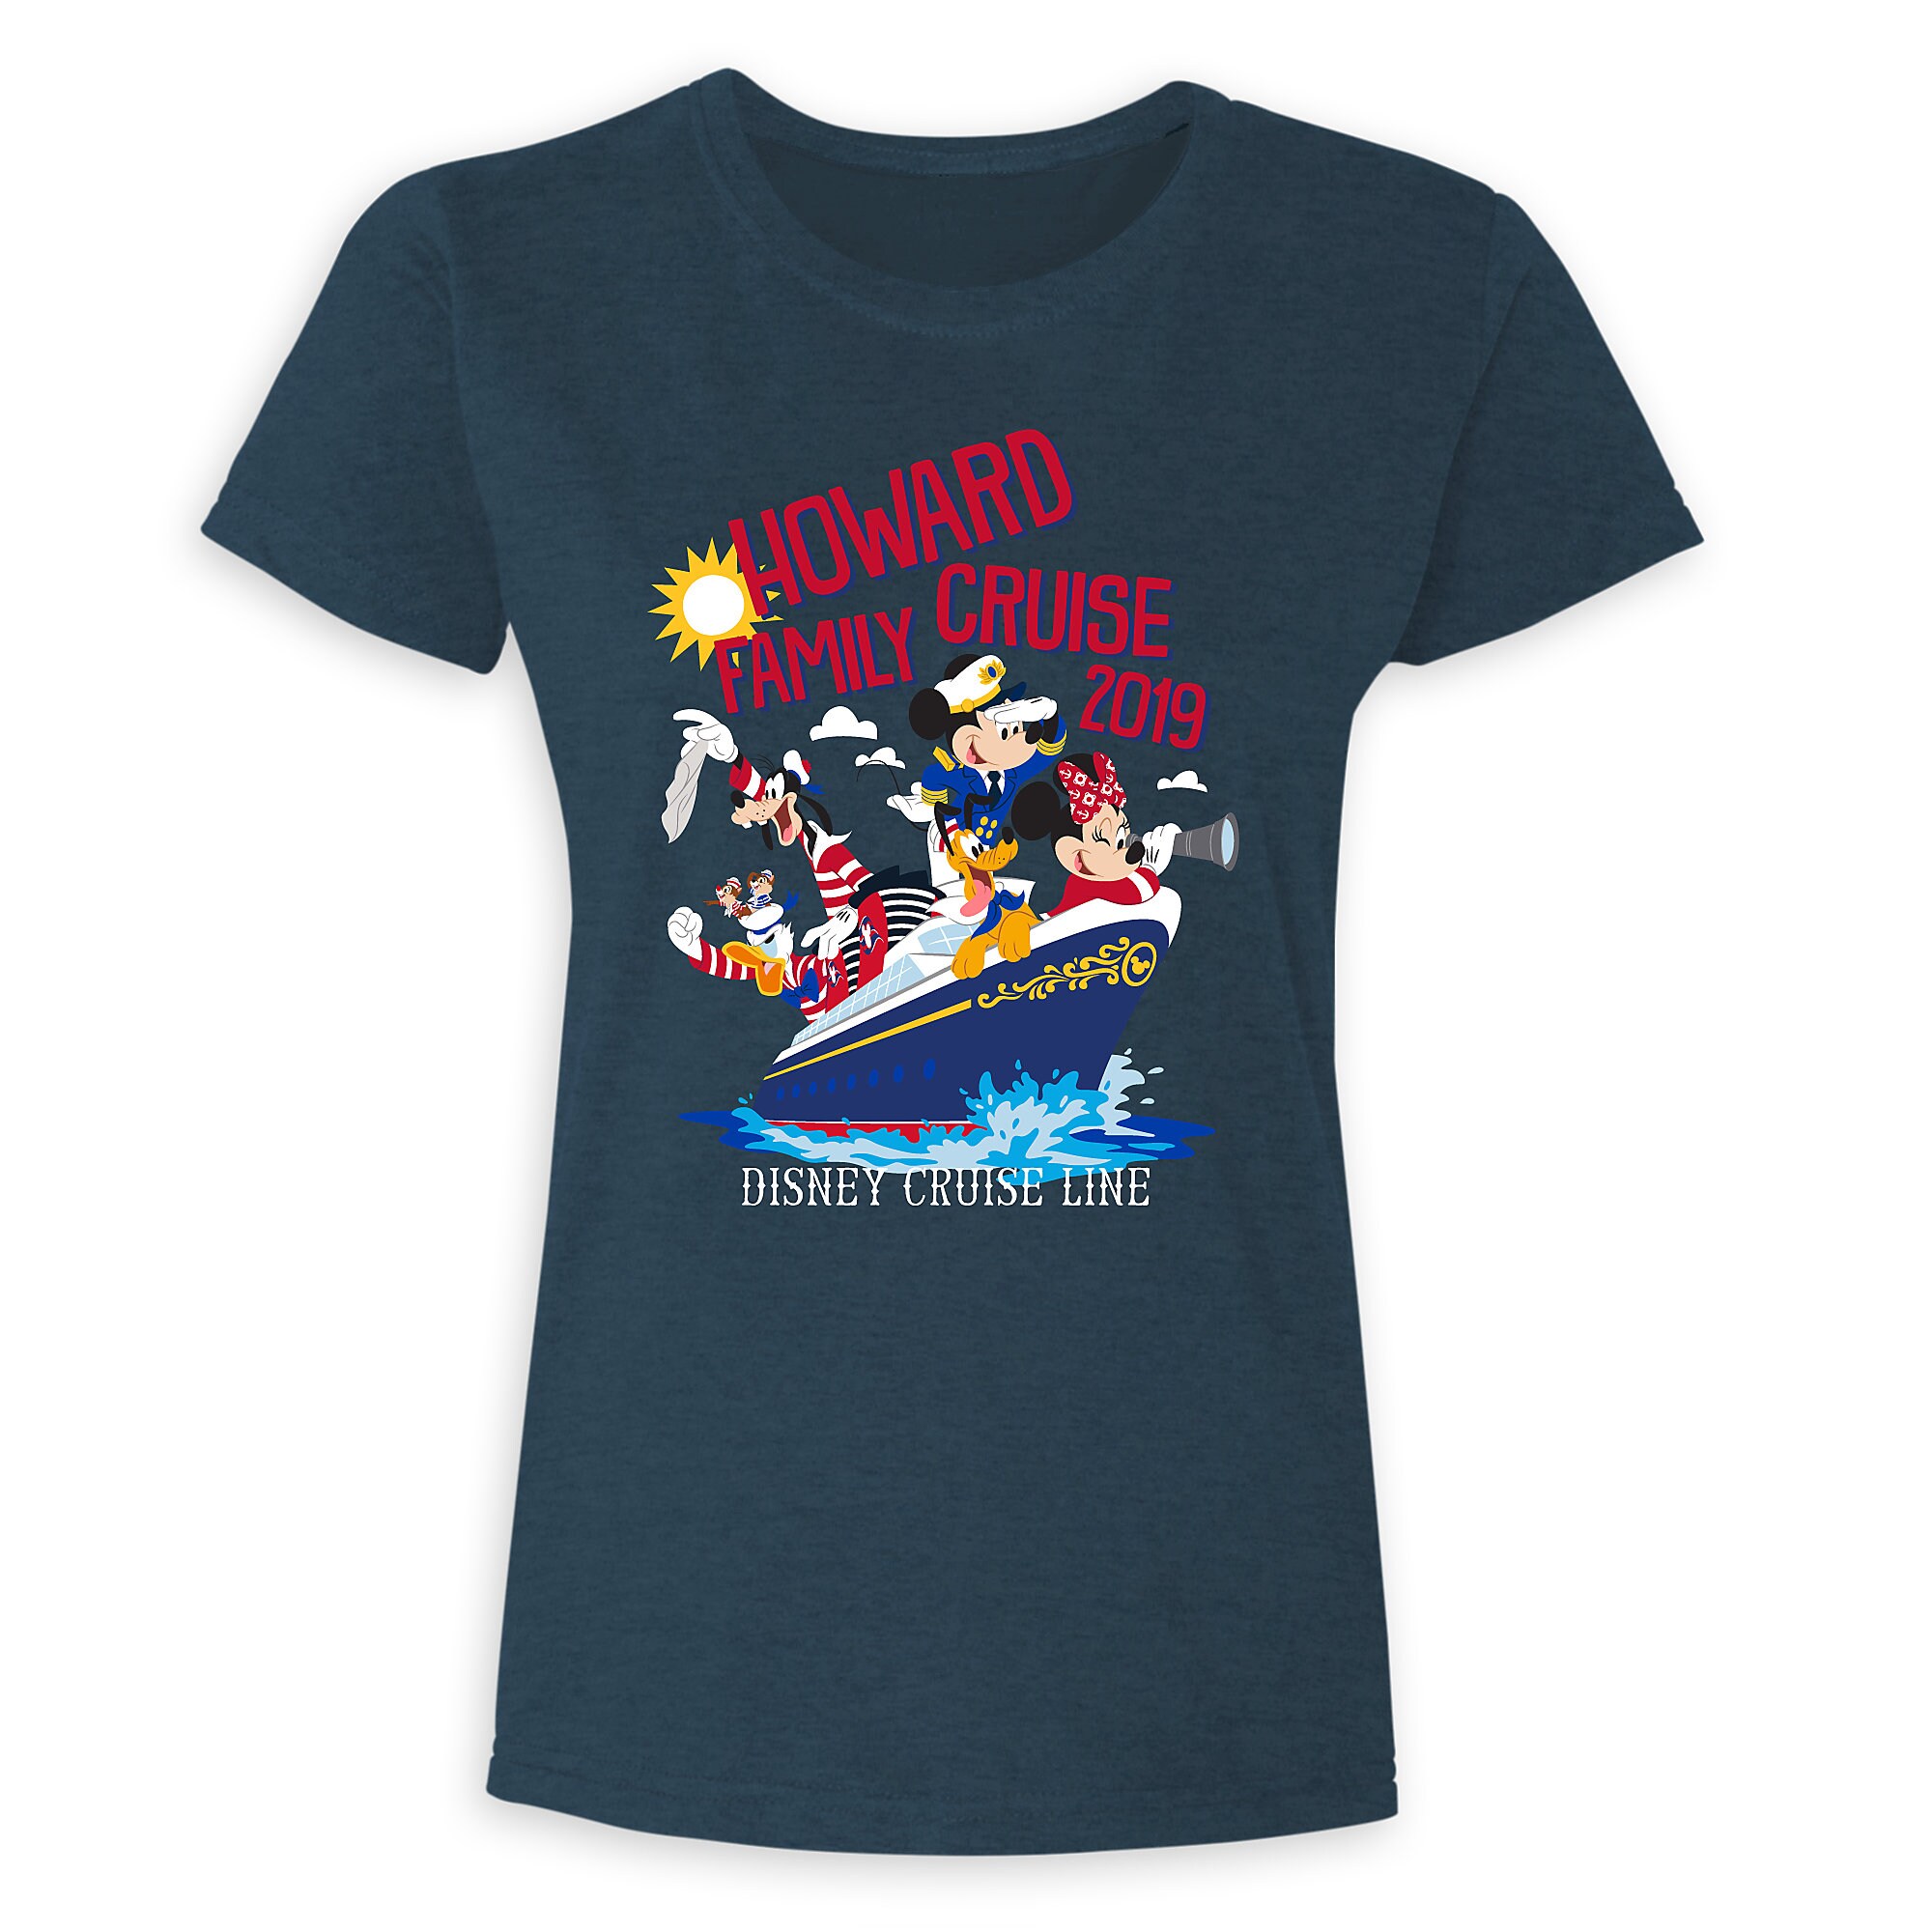 Women's Disney Cruise Line Family Cruise 2019 T-Shirt - Customized now ...